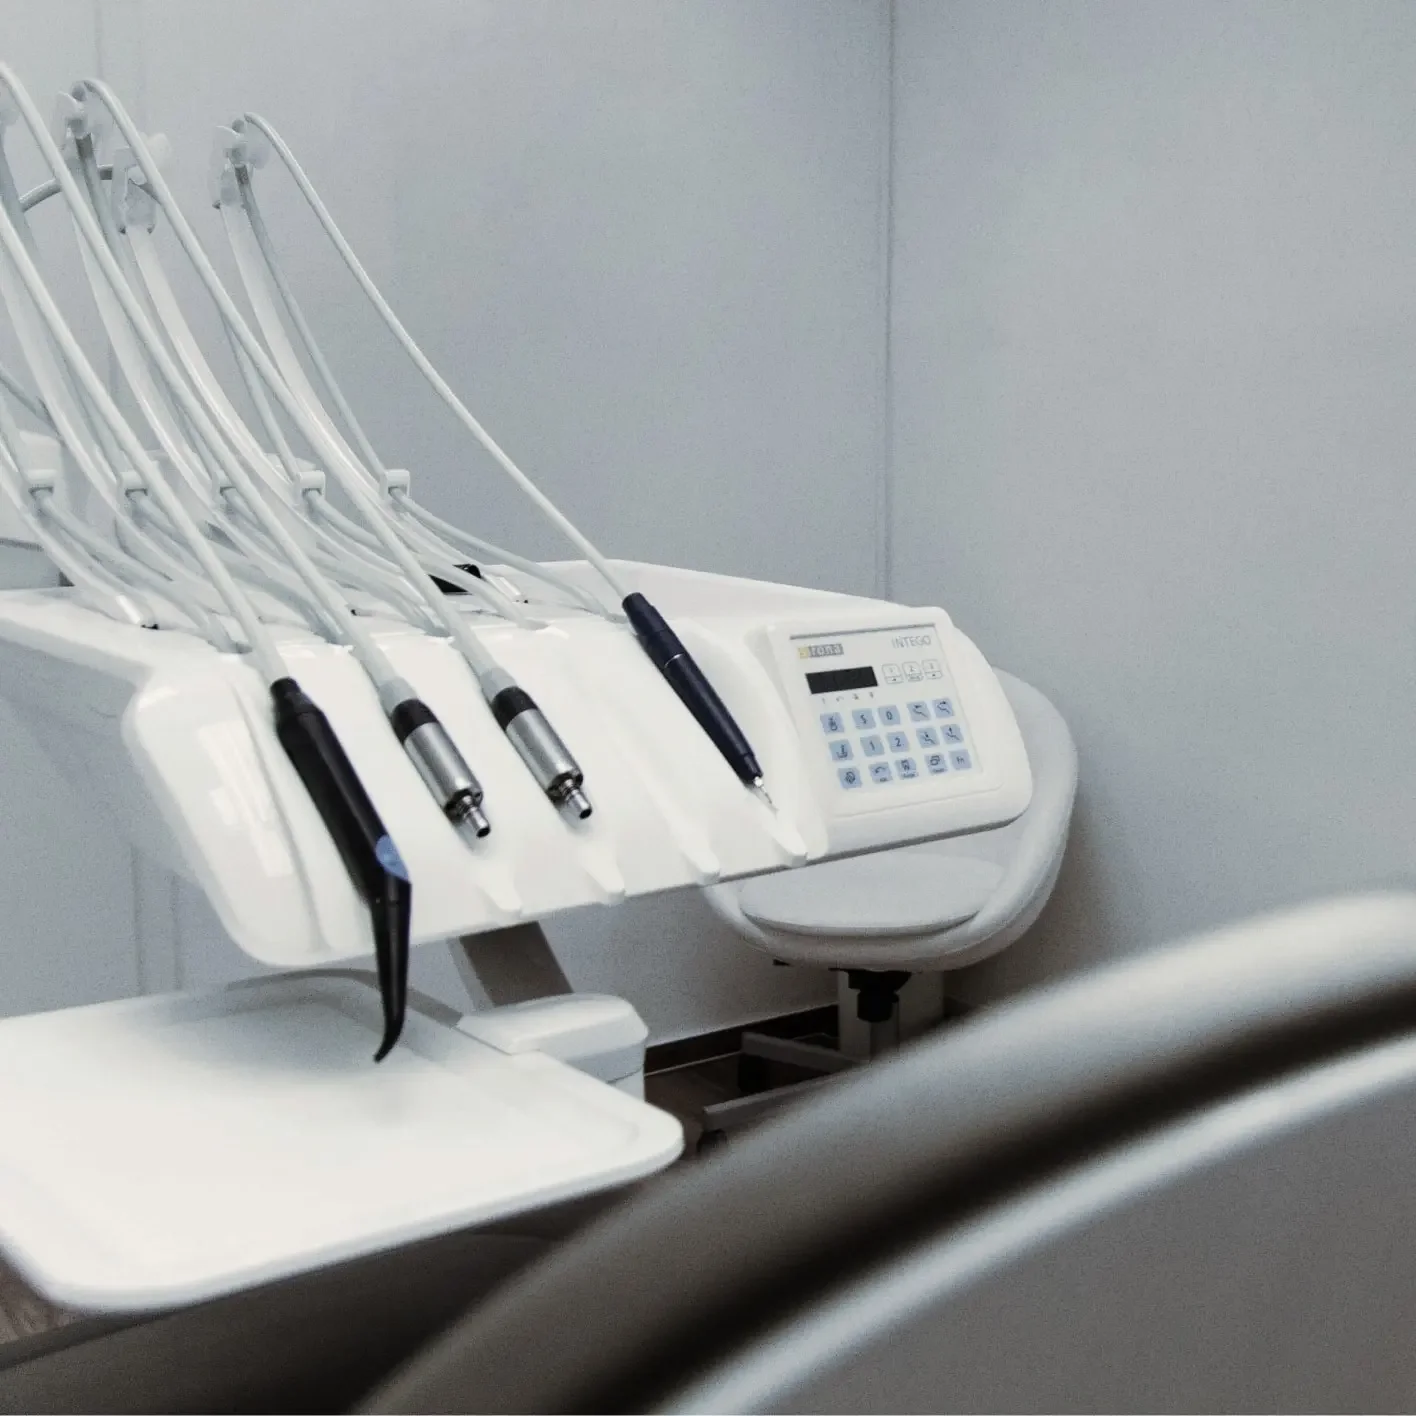 Dental equipment in a dental office